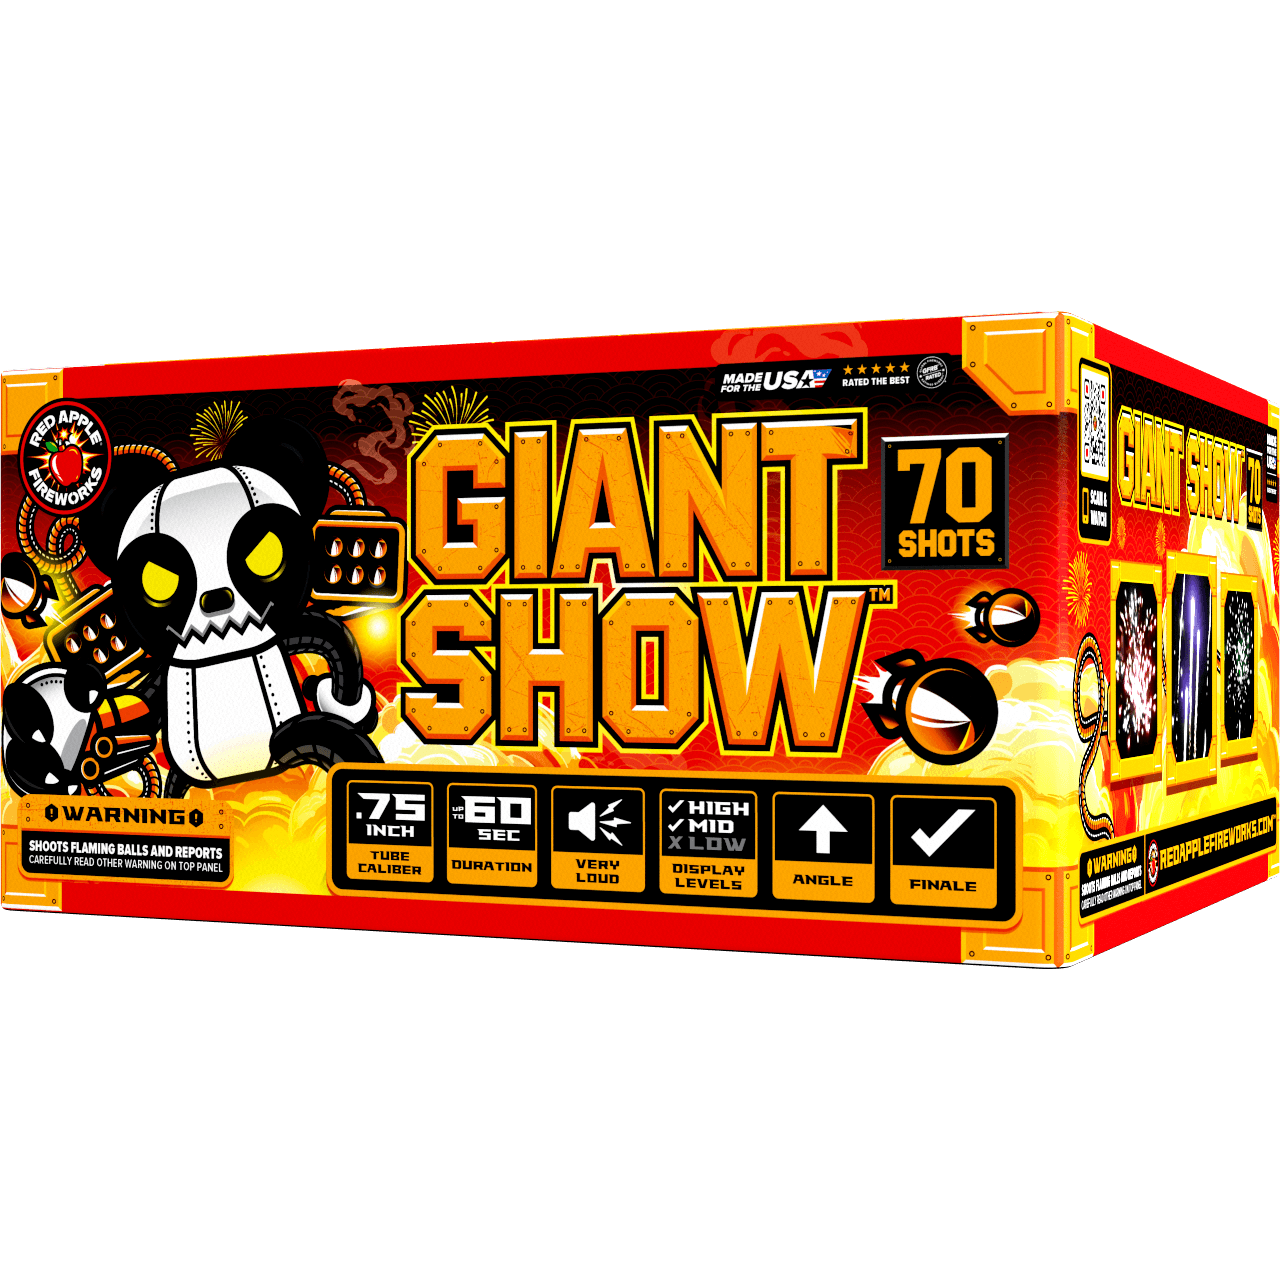 Giant Show 70-Shots XL® Aerials